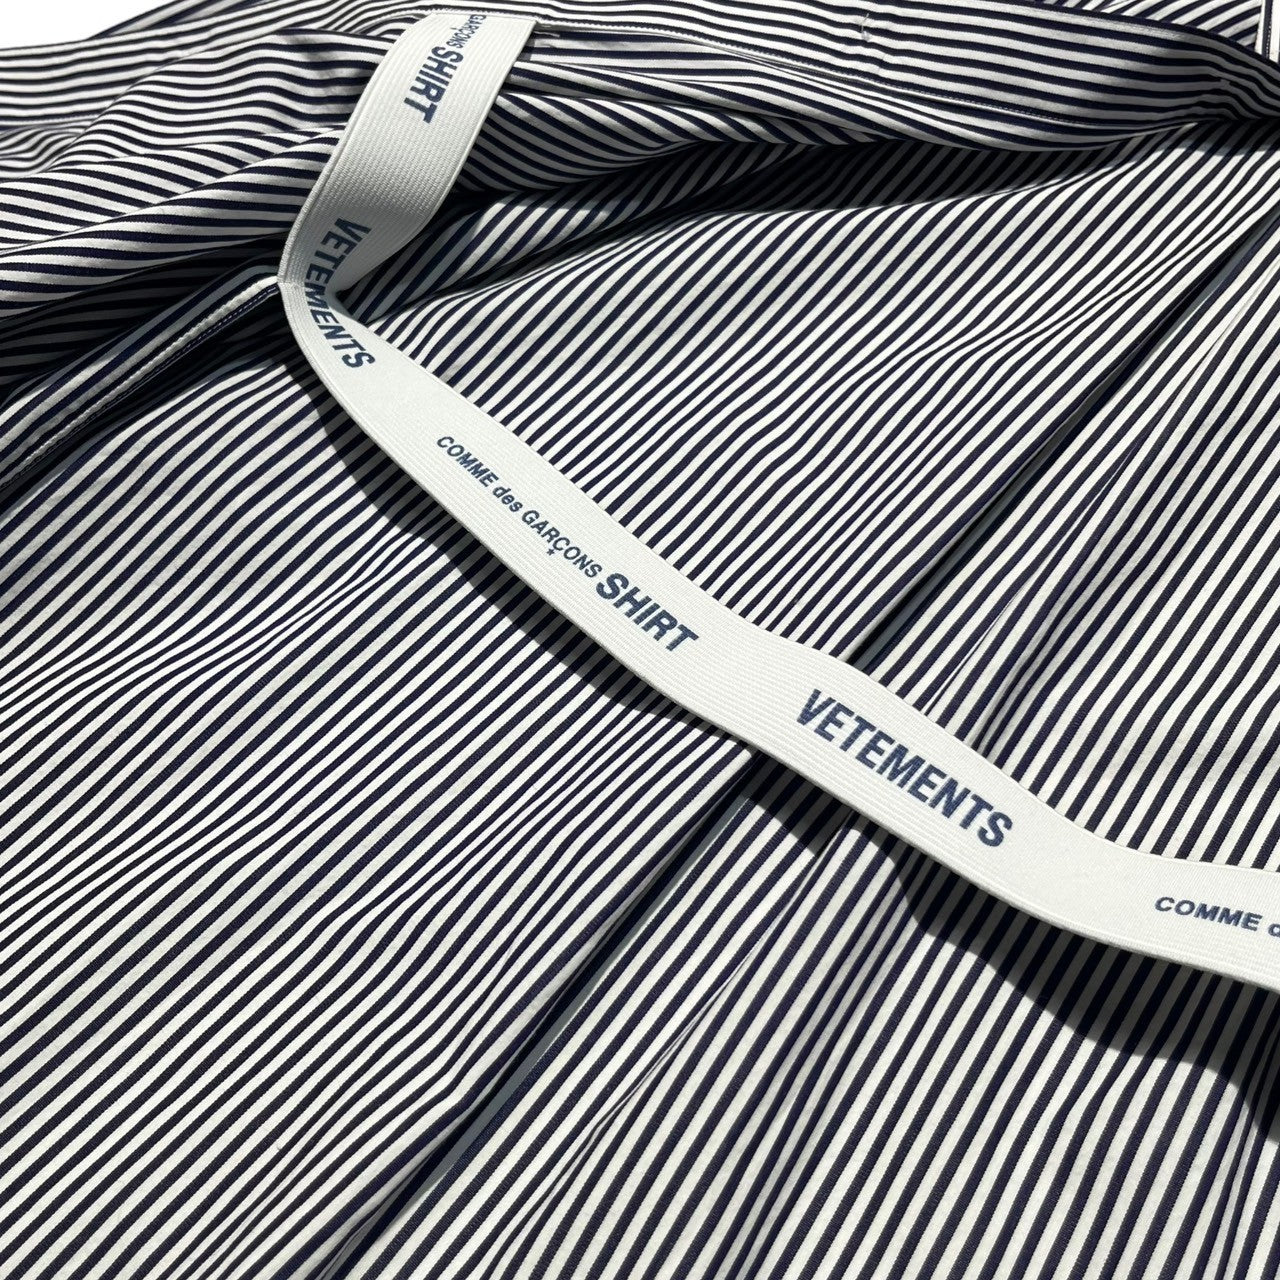 VETEMENT × COMME des GARCONS shirt(ヴェトモン×コムデギャルソンシャツ) 17SS STRIPE OVER  SHIRT ストライプオーバーシャツ WSS17CDG1 XS ネイビー×ホワイト コラボ稀少品